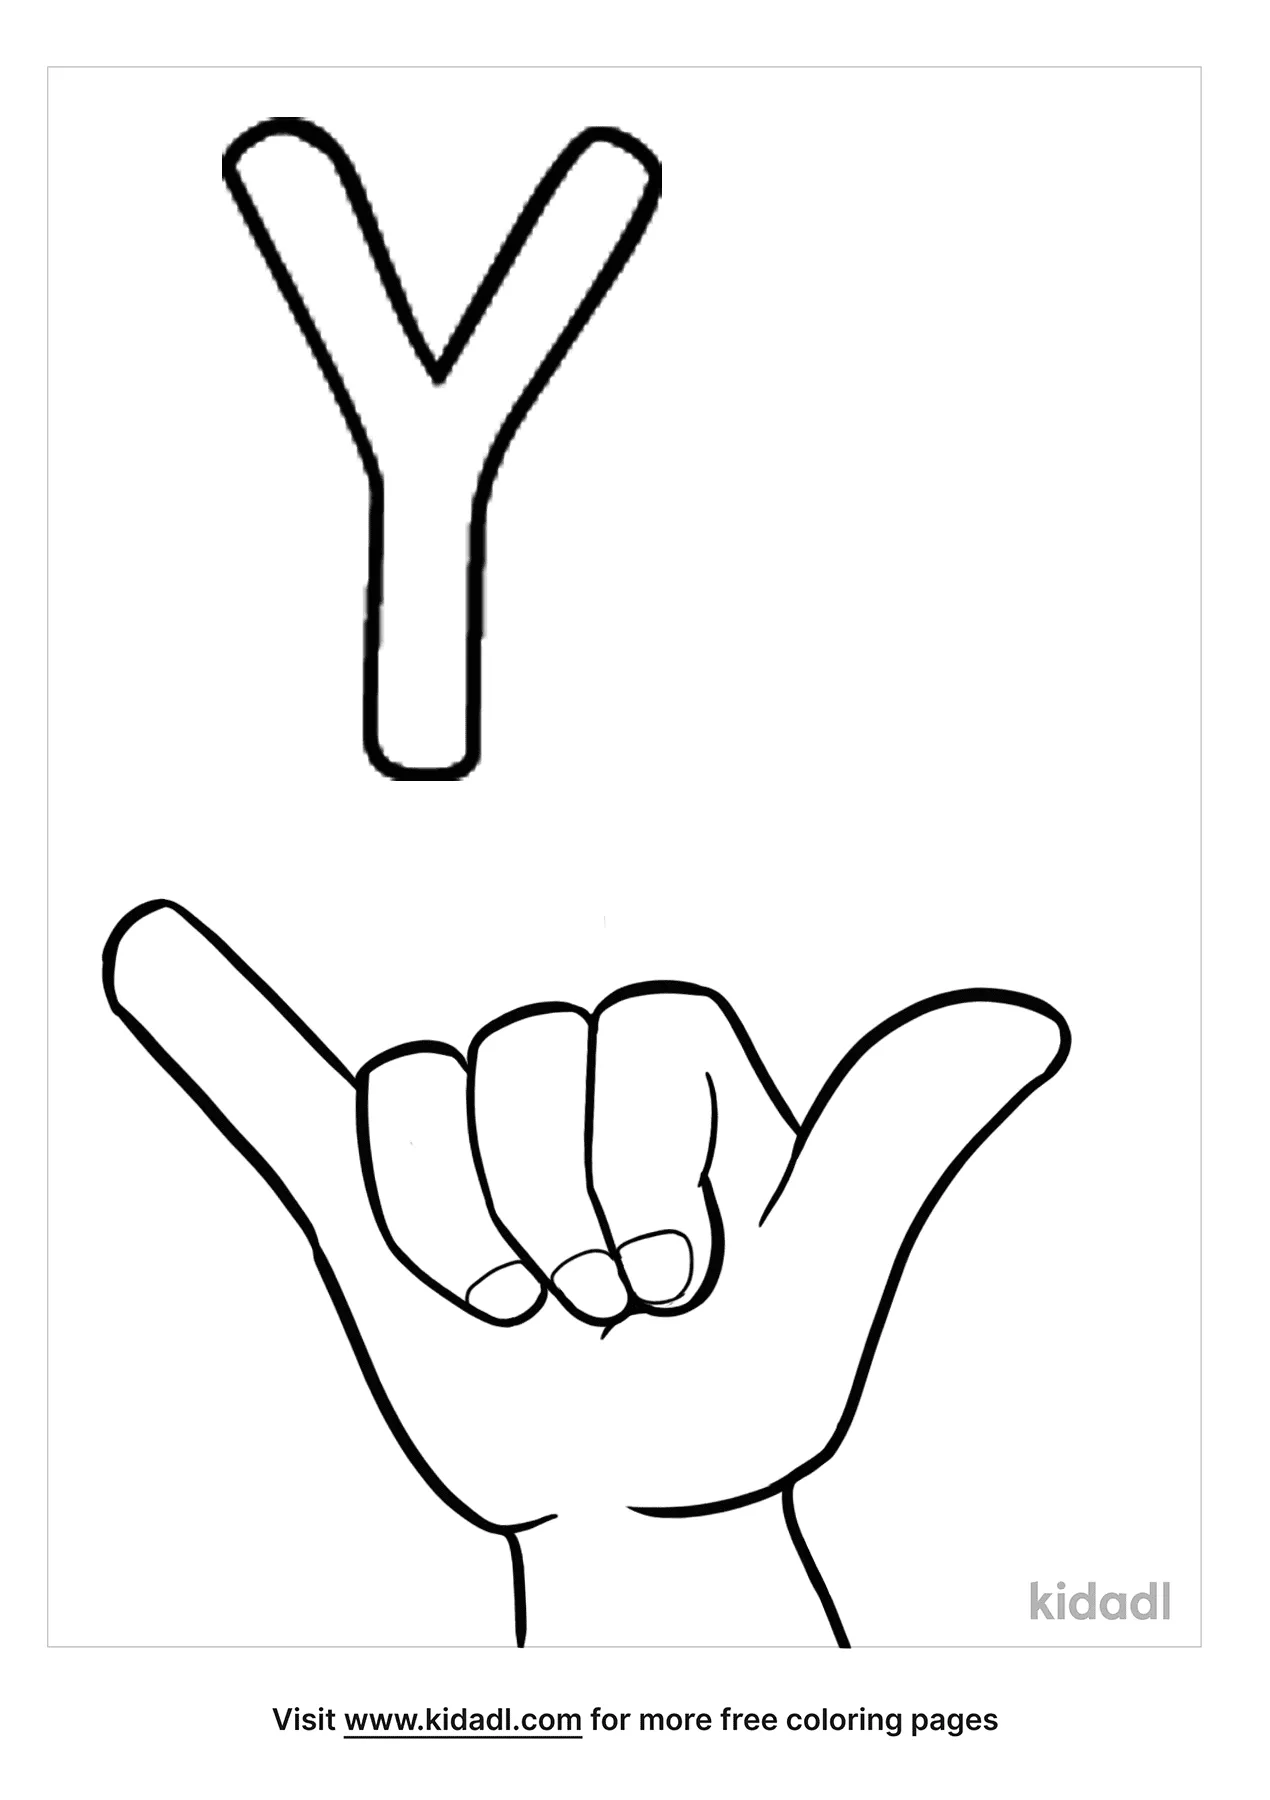 letter y in sign language kidadl